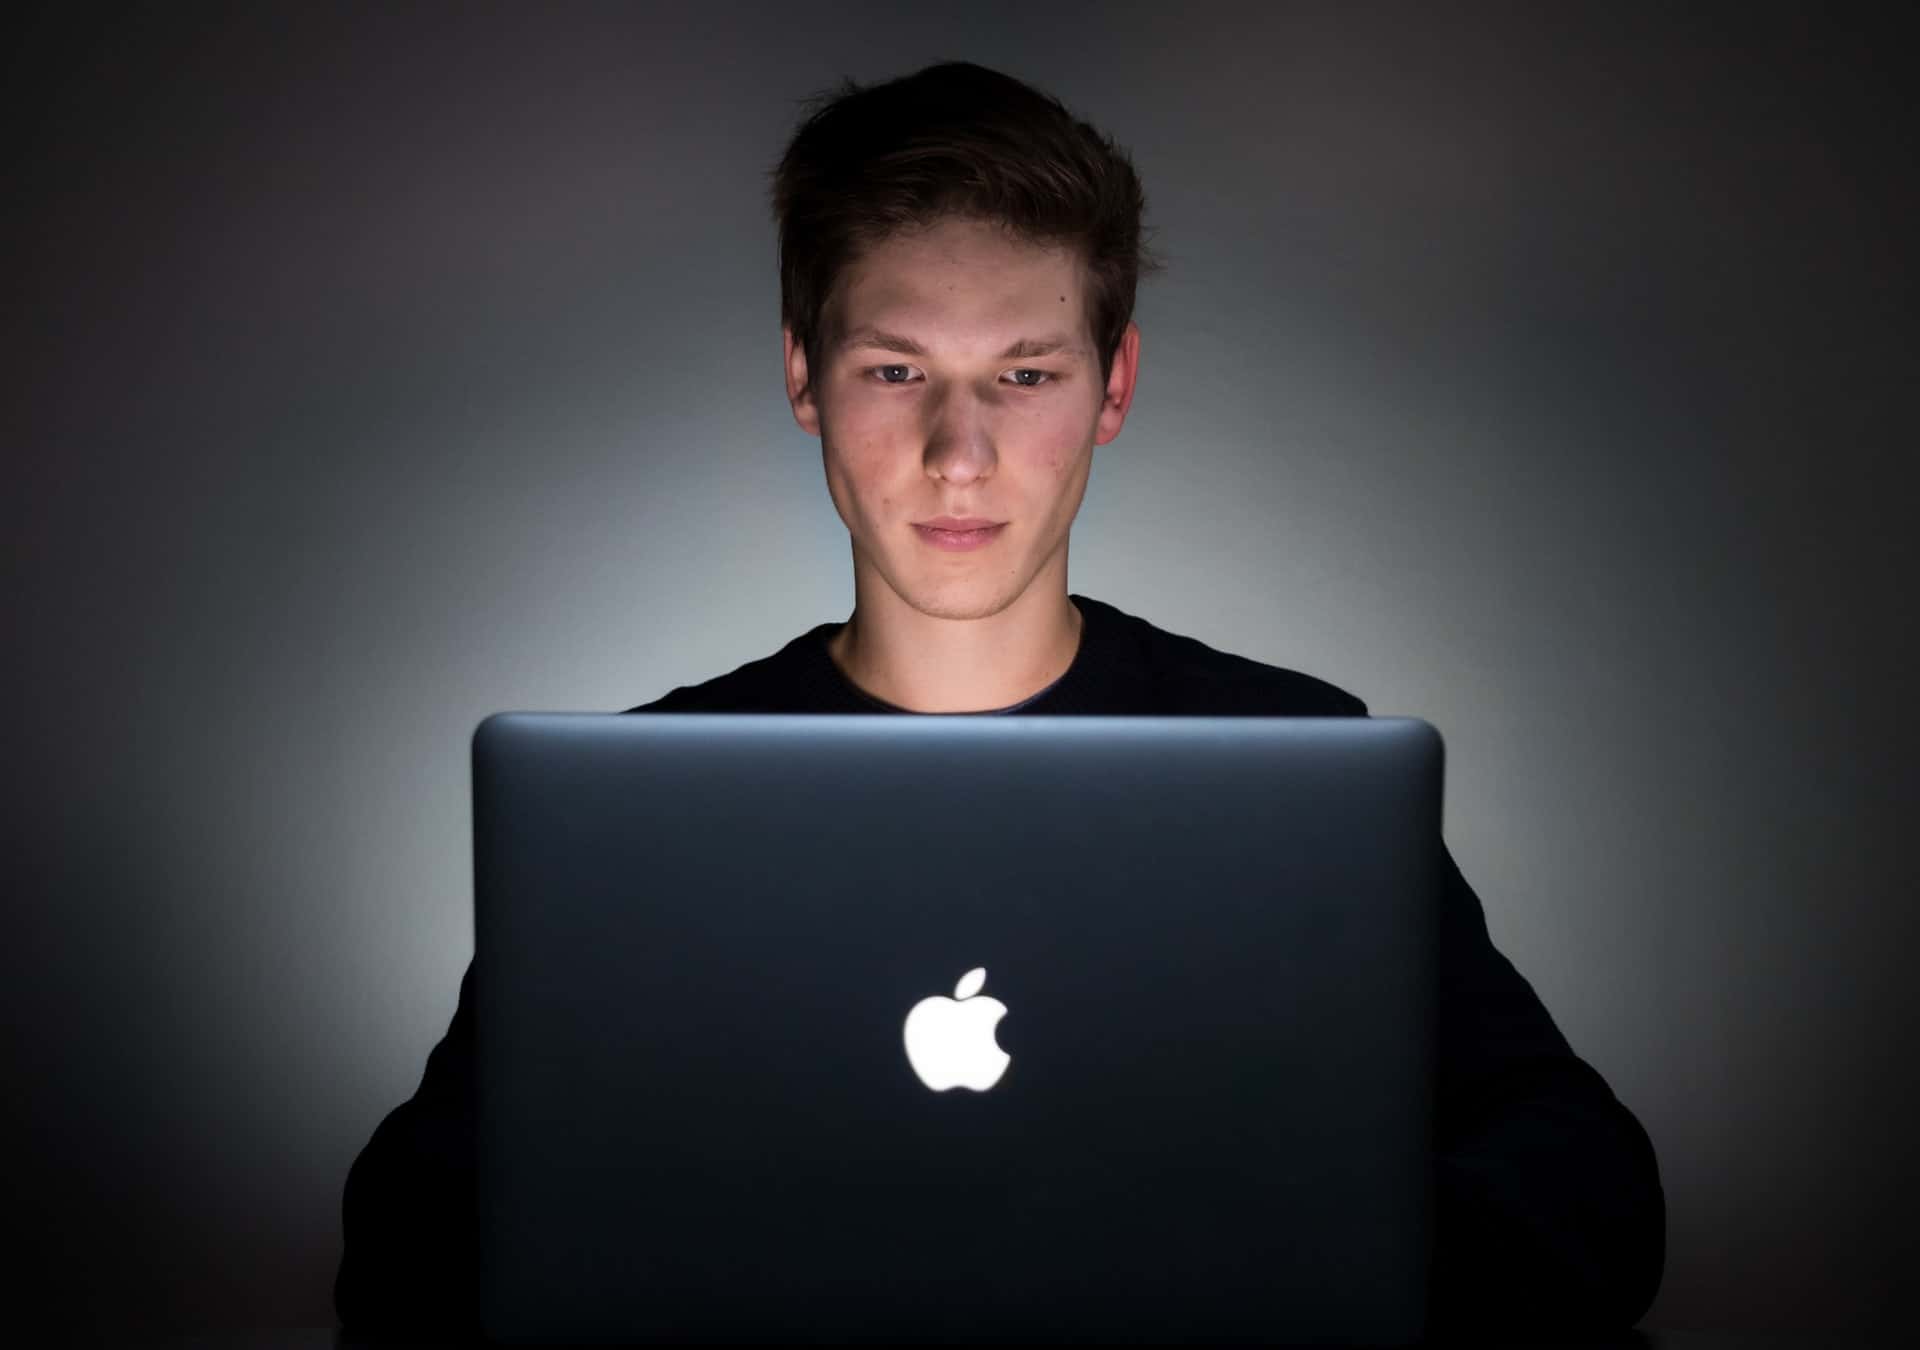 Man using laptop in the dark